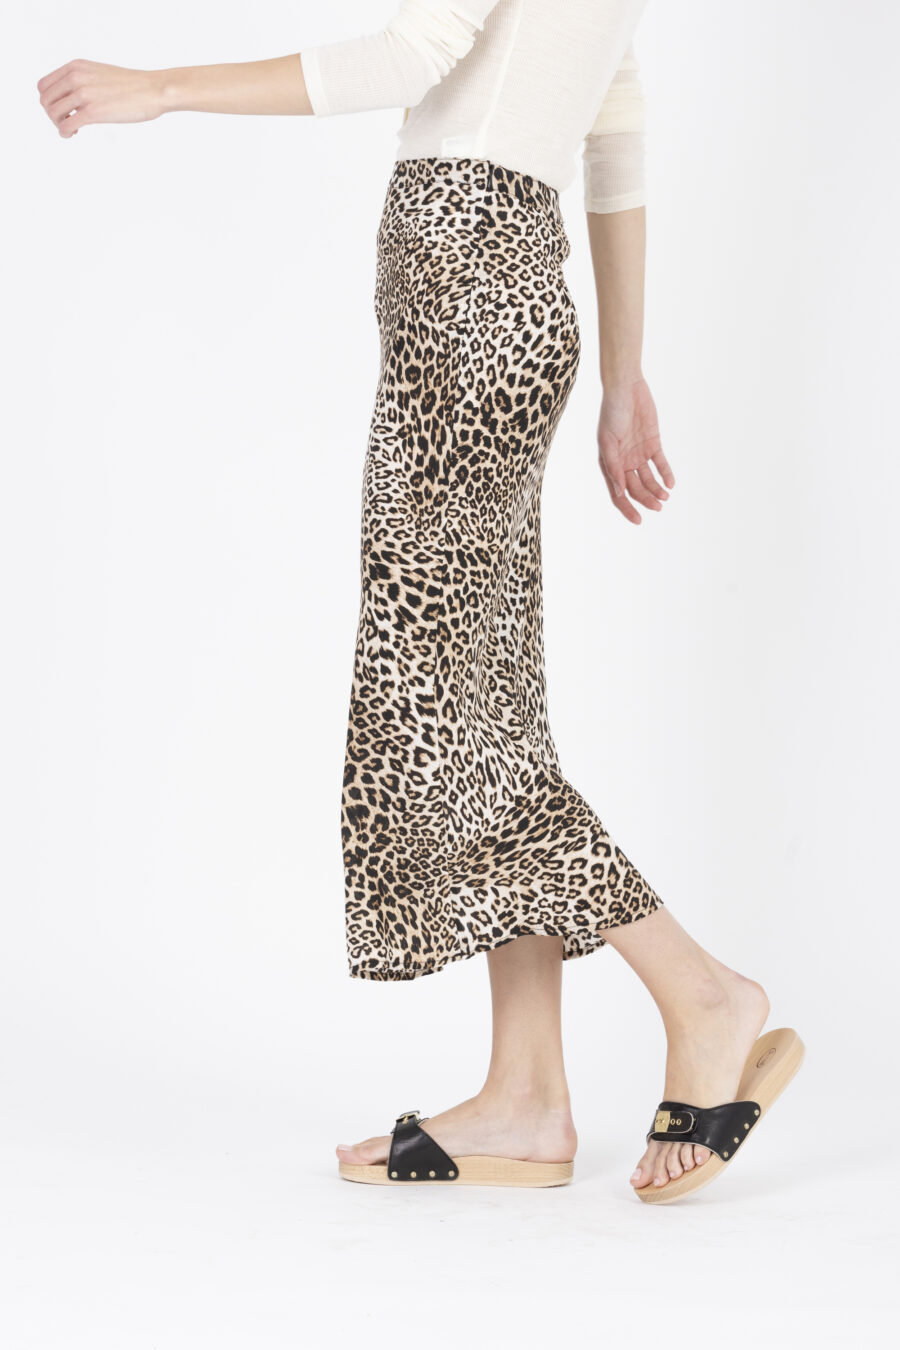 animal-print-leopard-skirt-uniforme-athens